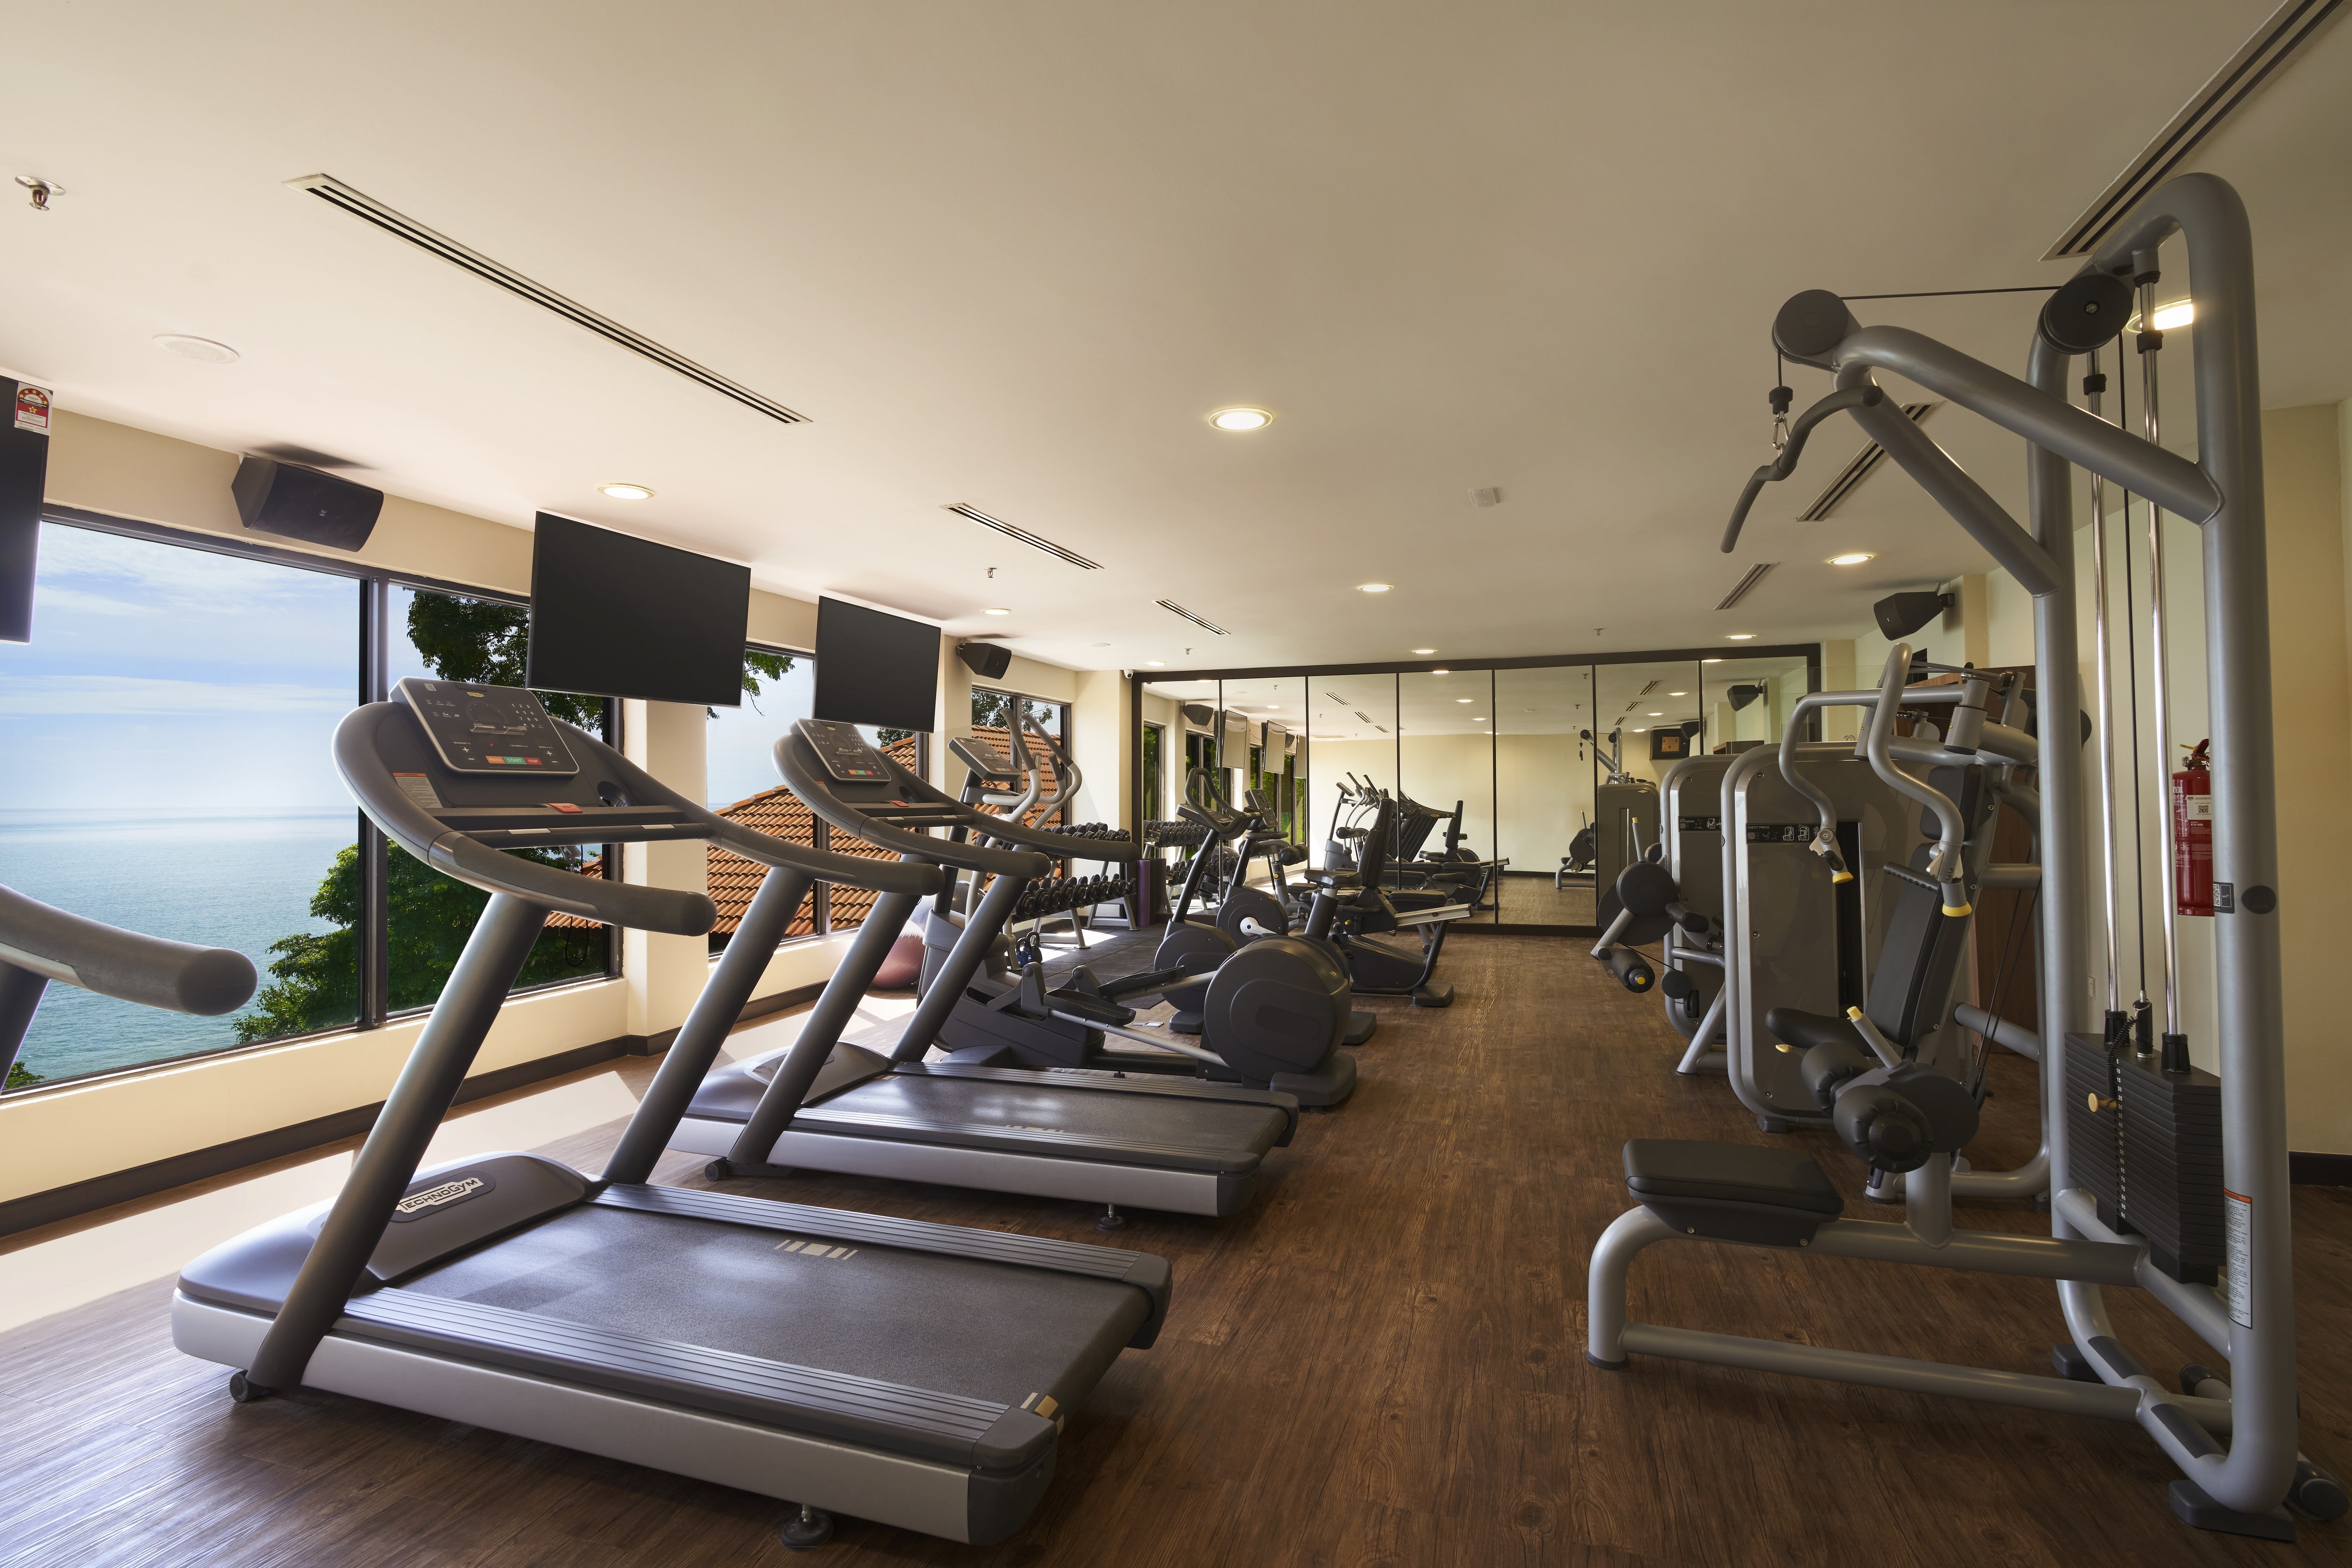 Fitness center treadmills and weight machines